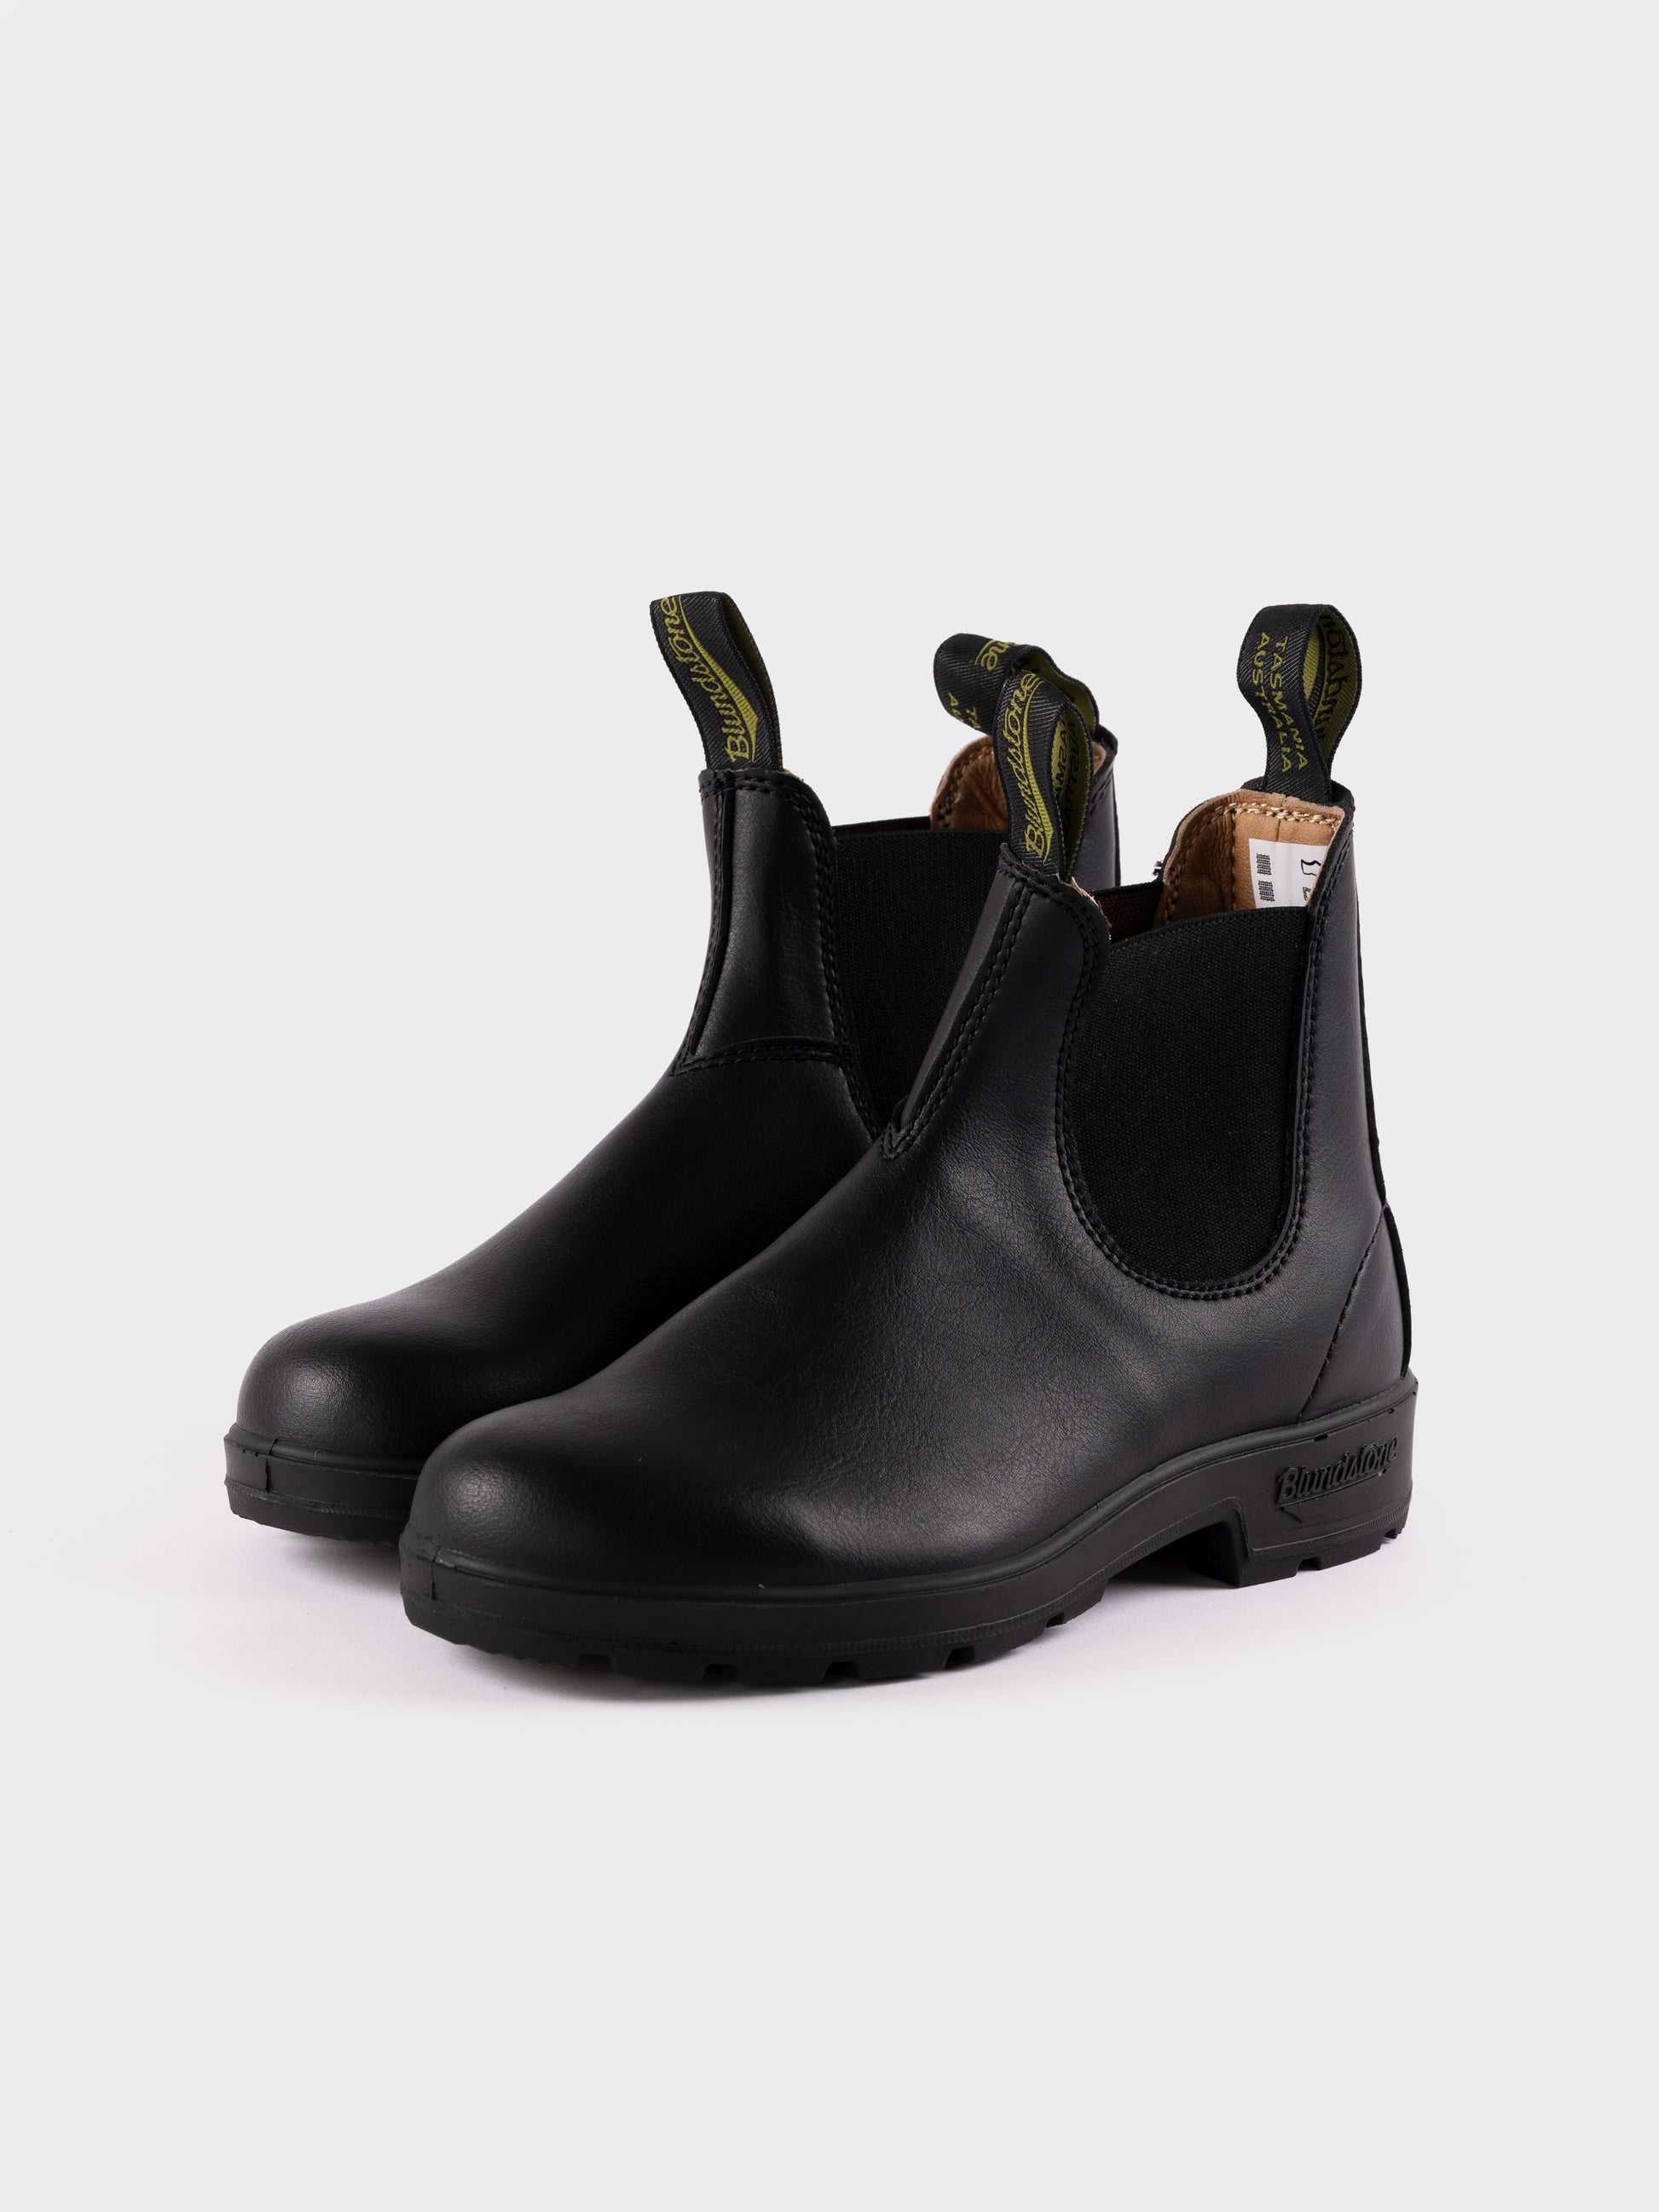 Blundstone Boots - 2115 - Black Vegan